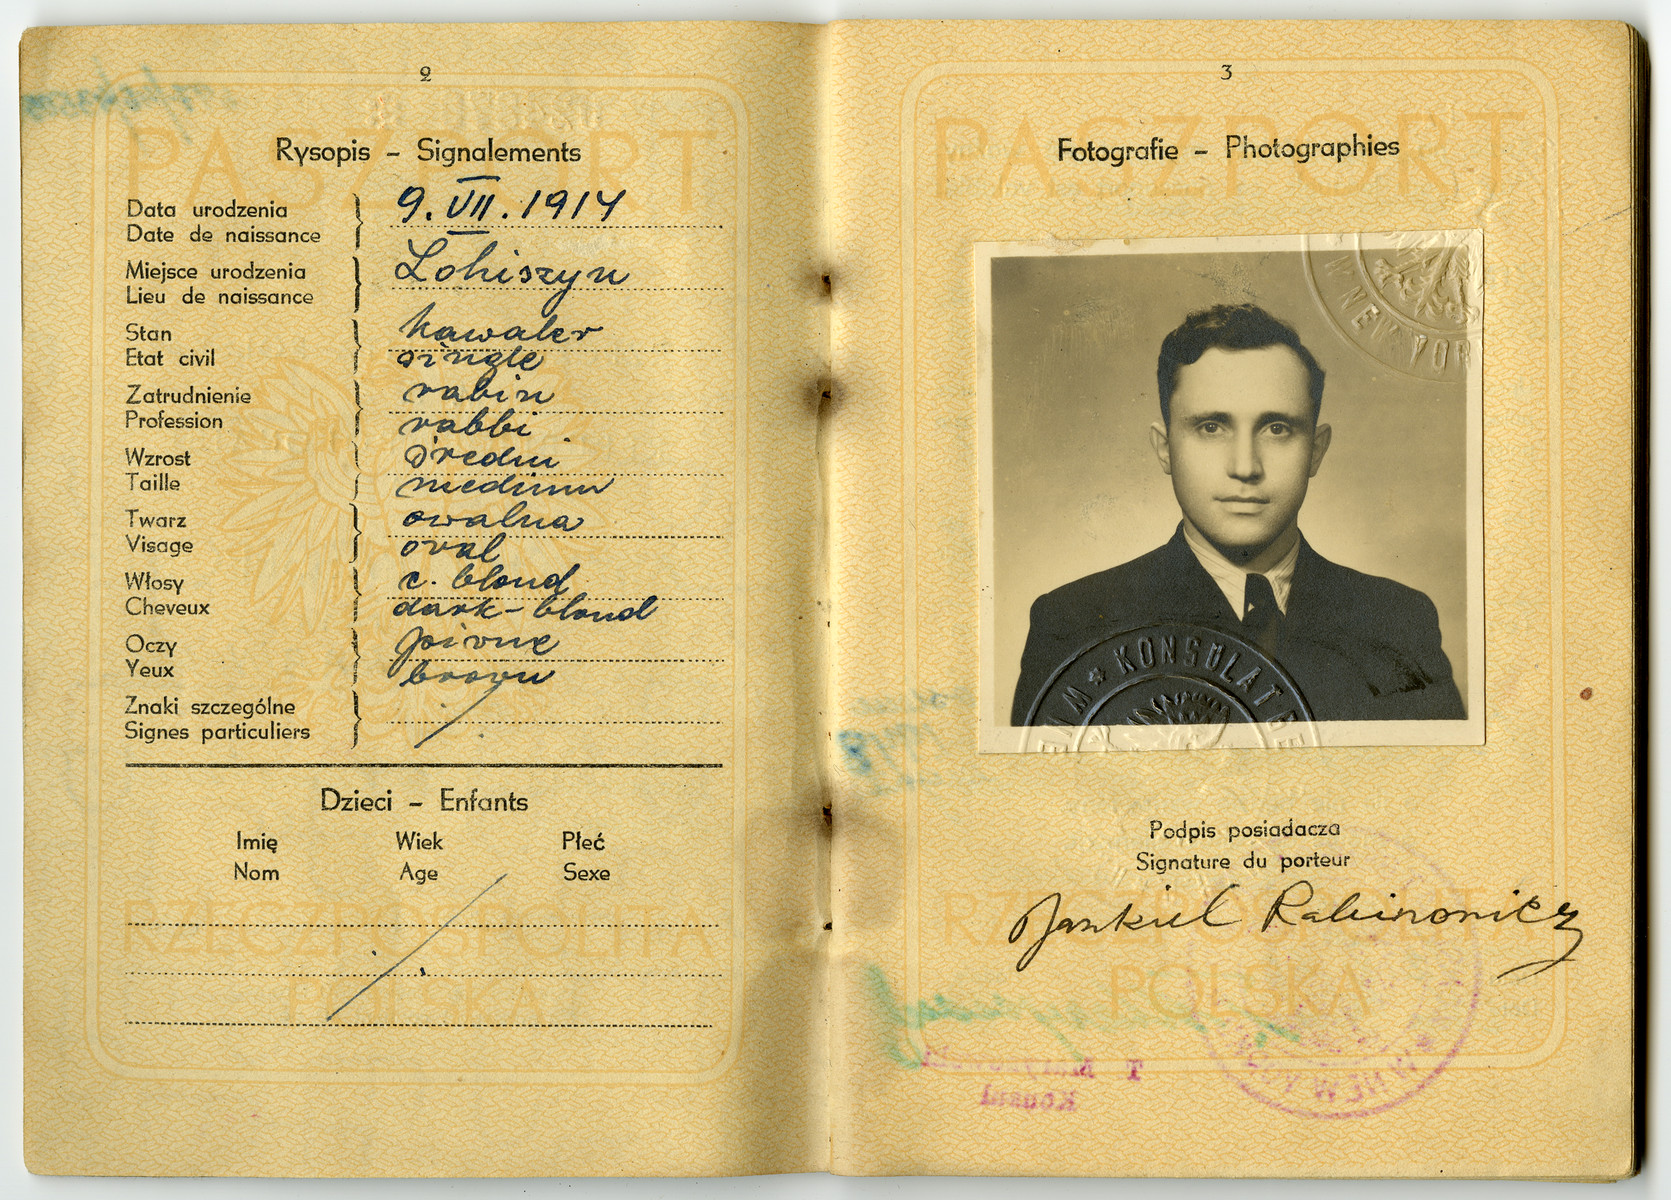 Polish passport issued to Jankiel Rabinowicz.